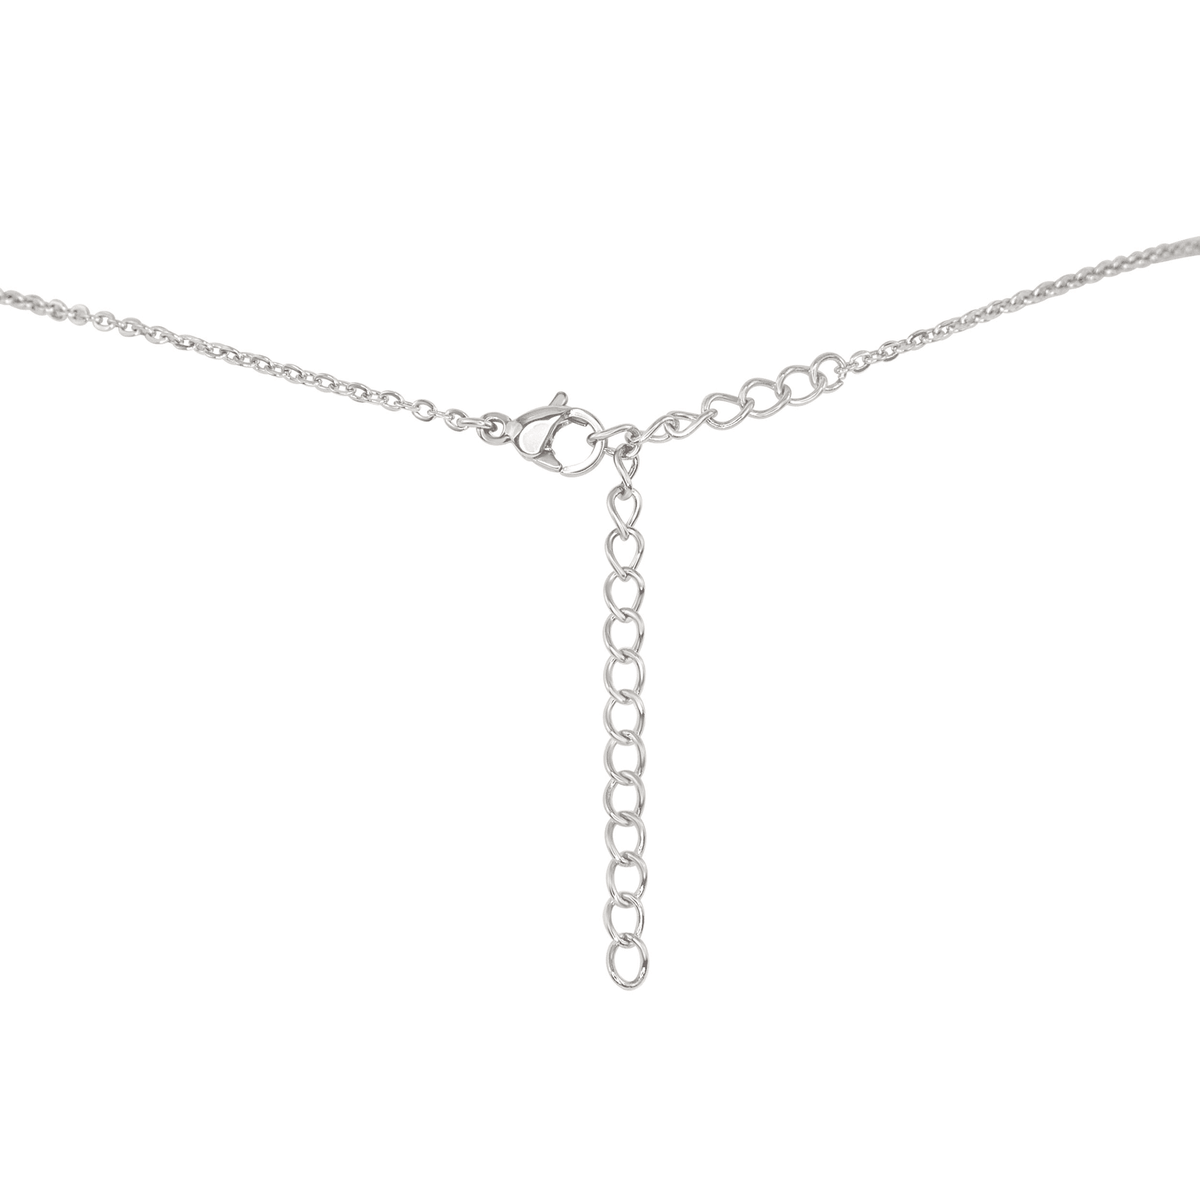 Chrysoprase Chip Bead Bar Necklace - Chrysoprase Chip Bead Bar Necklace - 14k Gold Fill - Luna Tide Handmade Crystal Jewellery